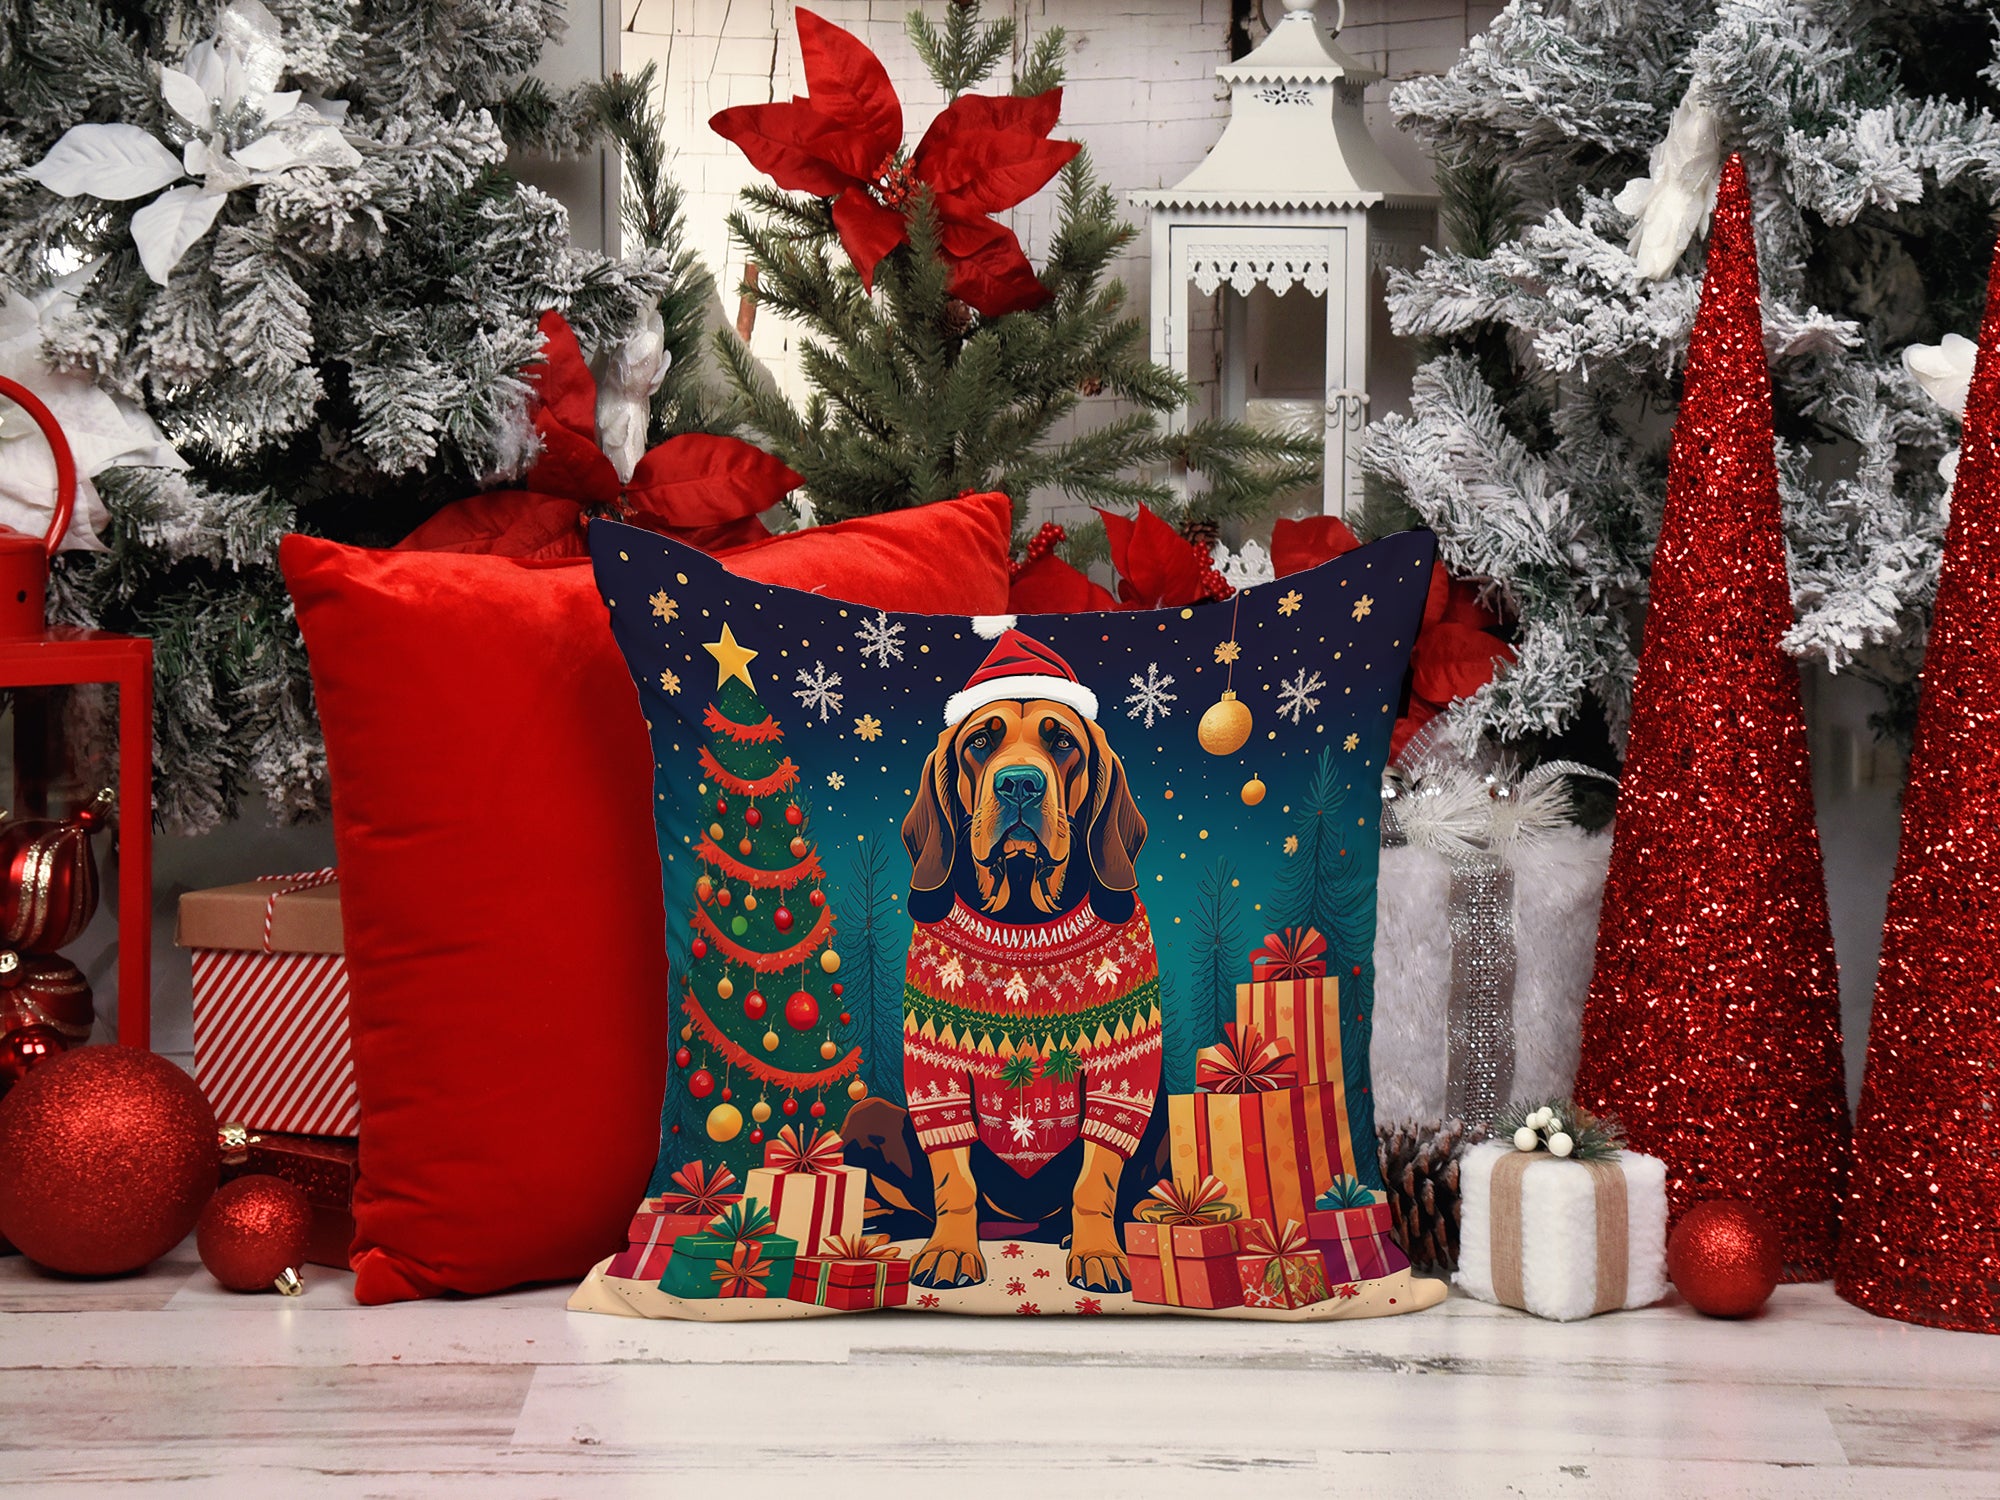 Bloodhound Christmas Fabric Decorative Pillow